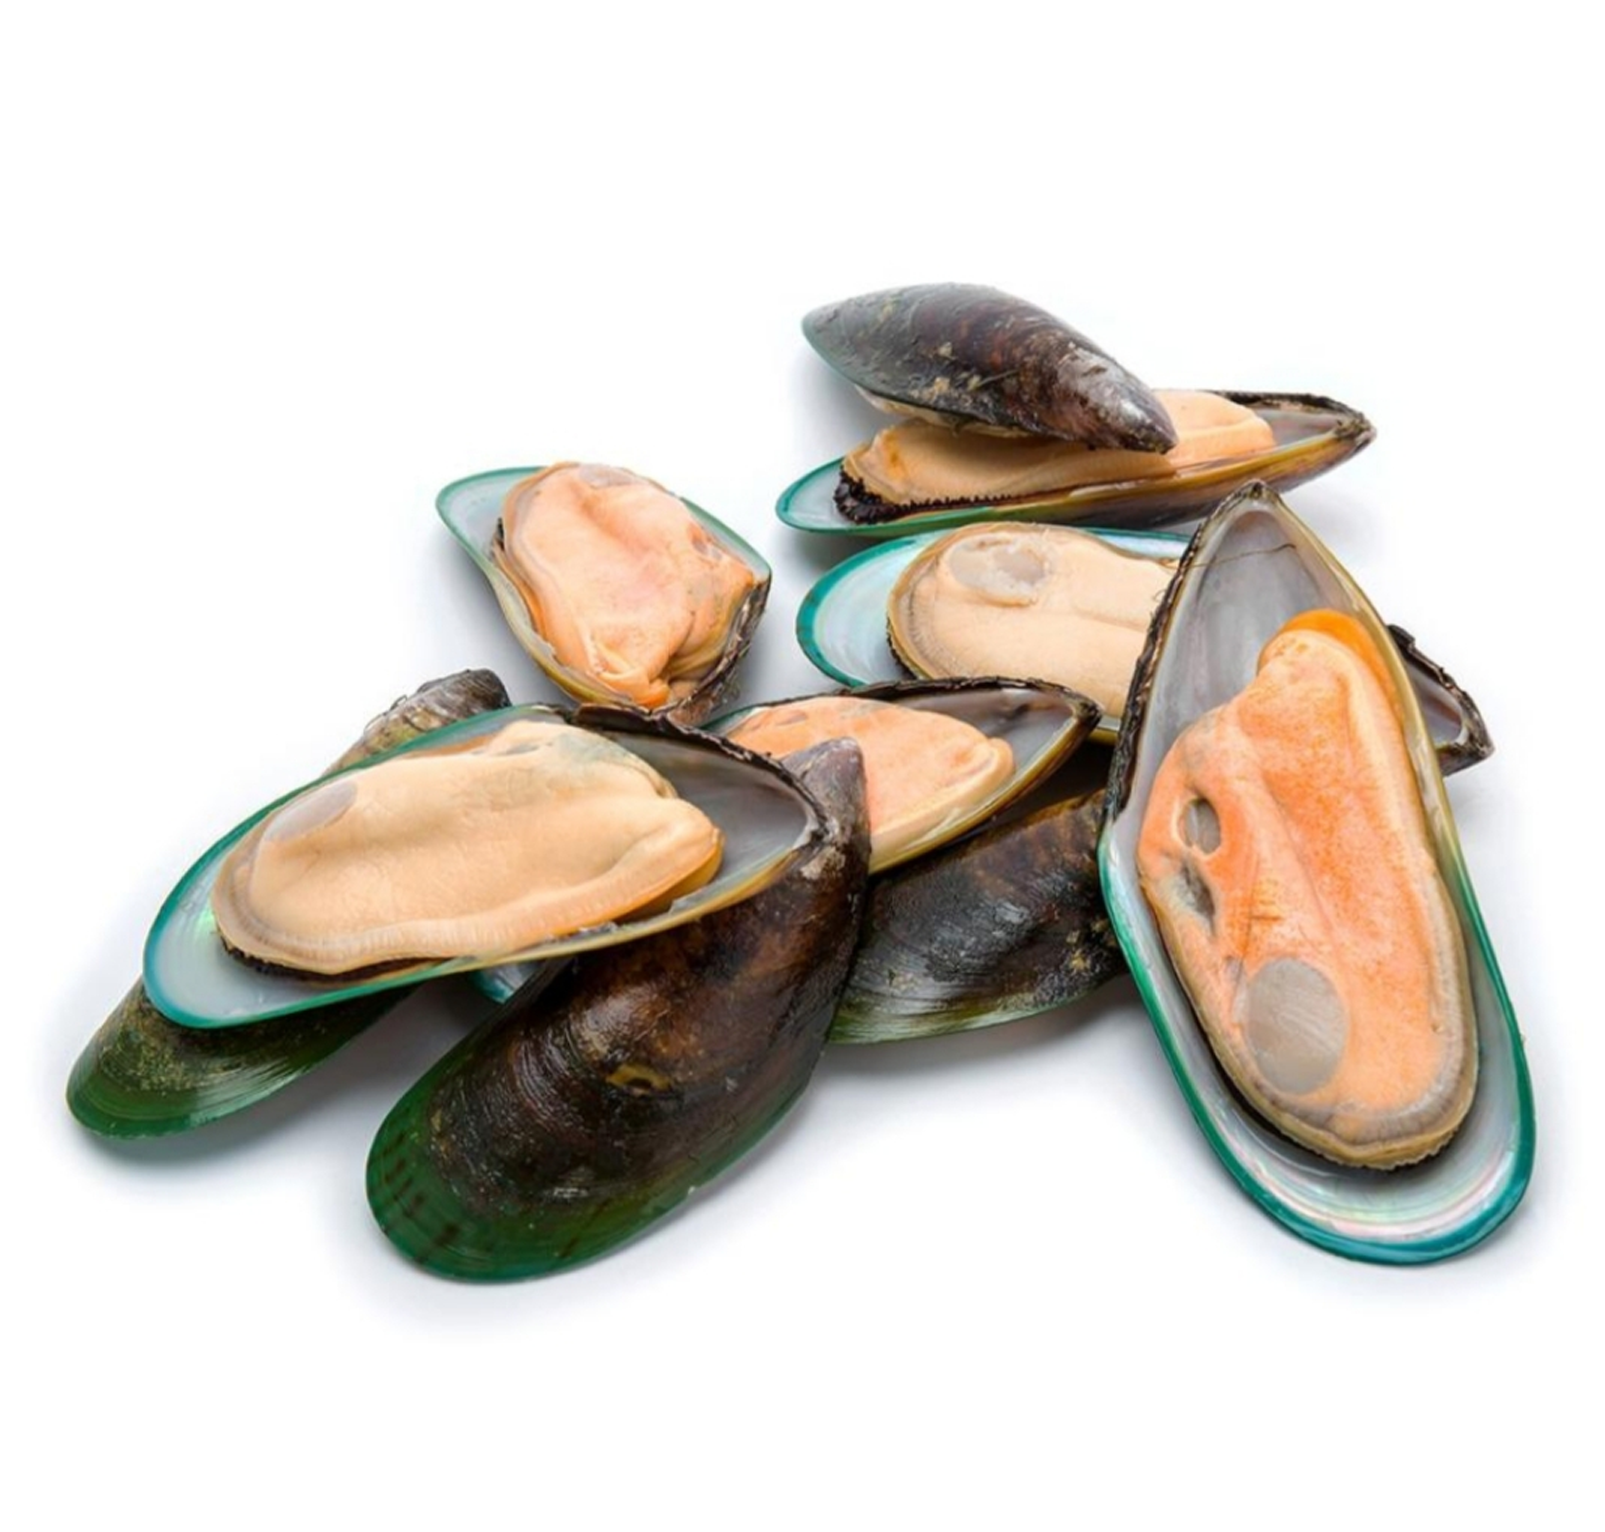 green lipped mussel benefits